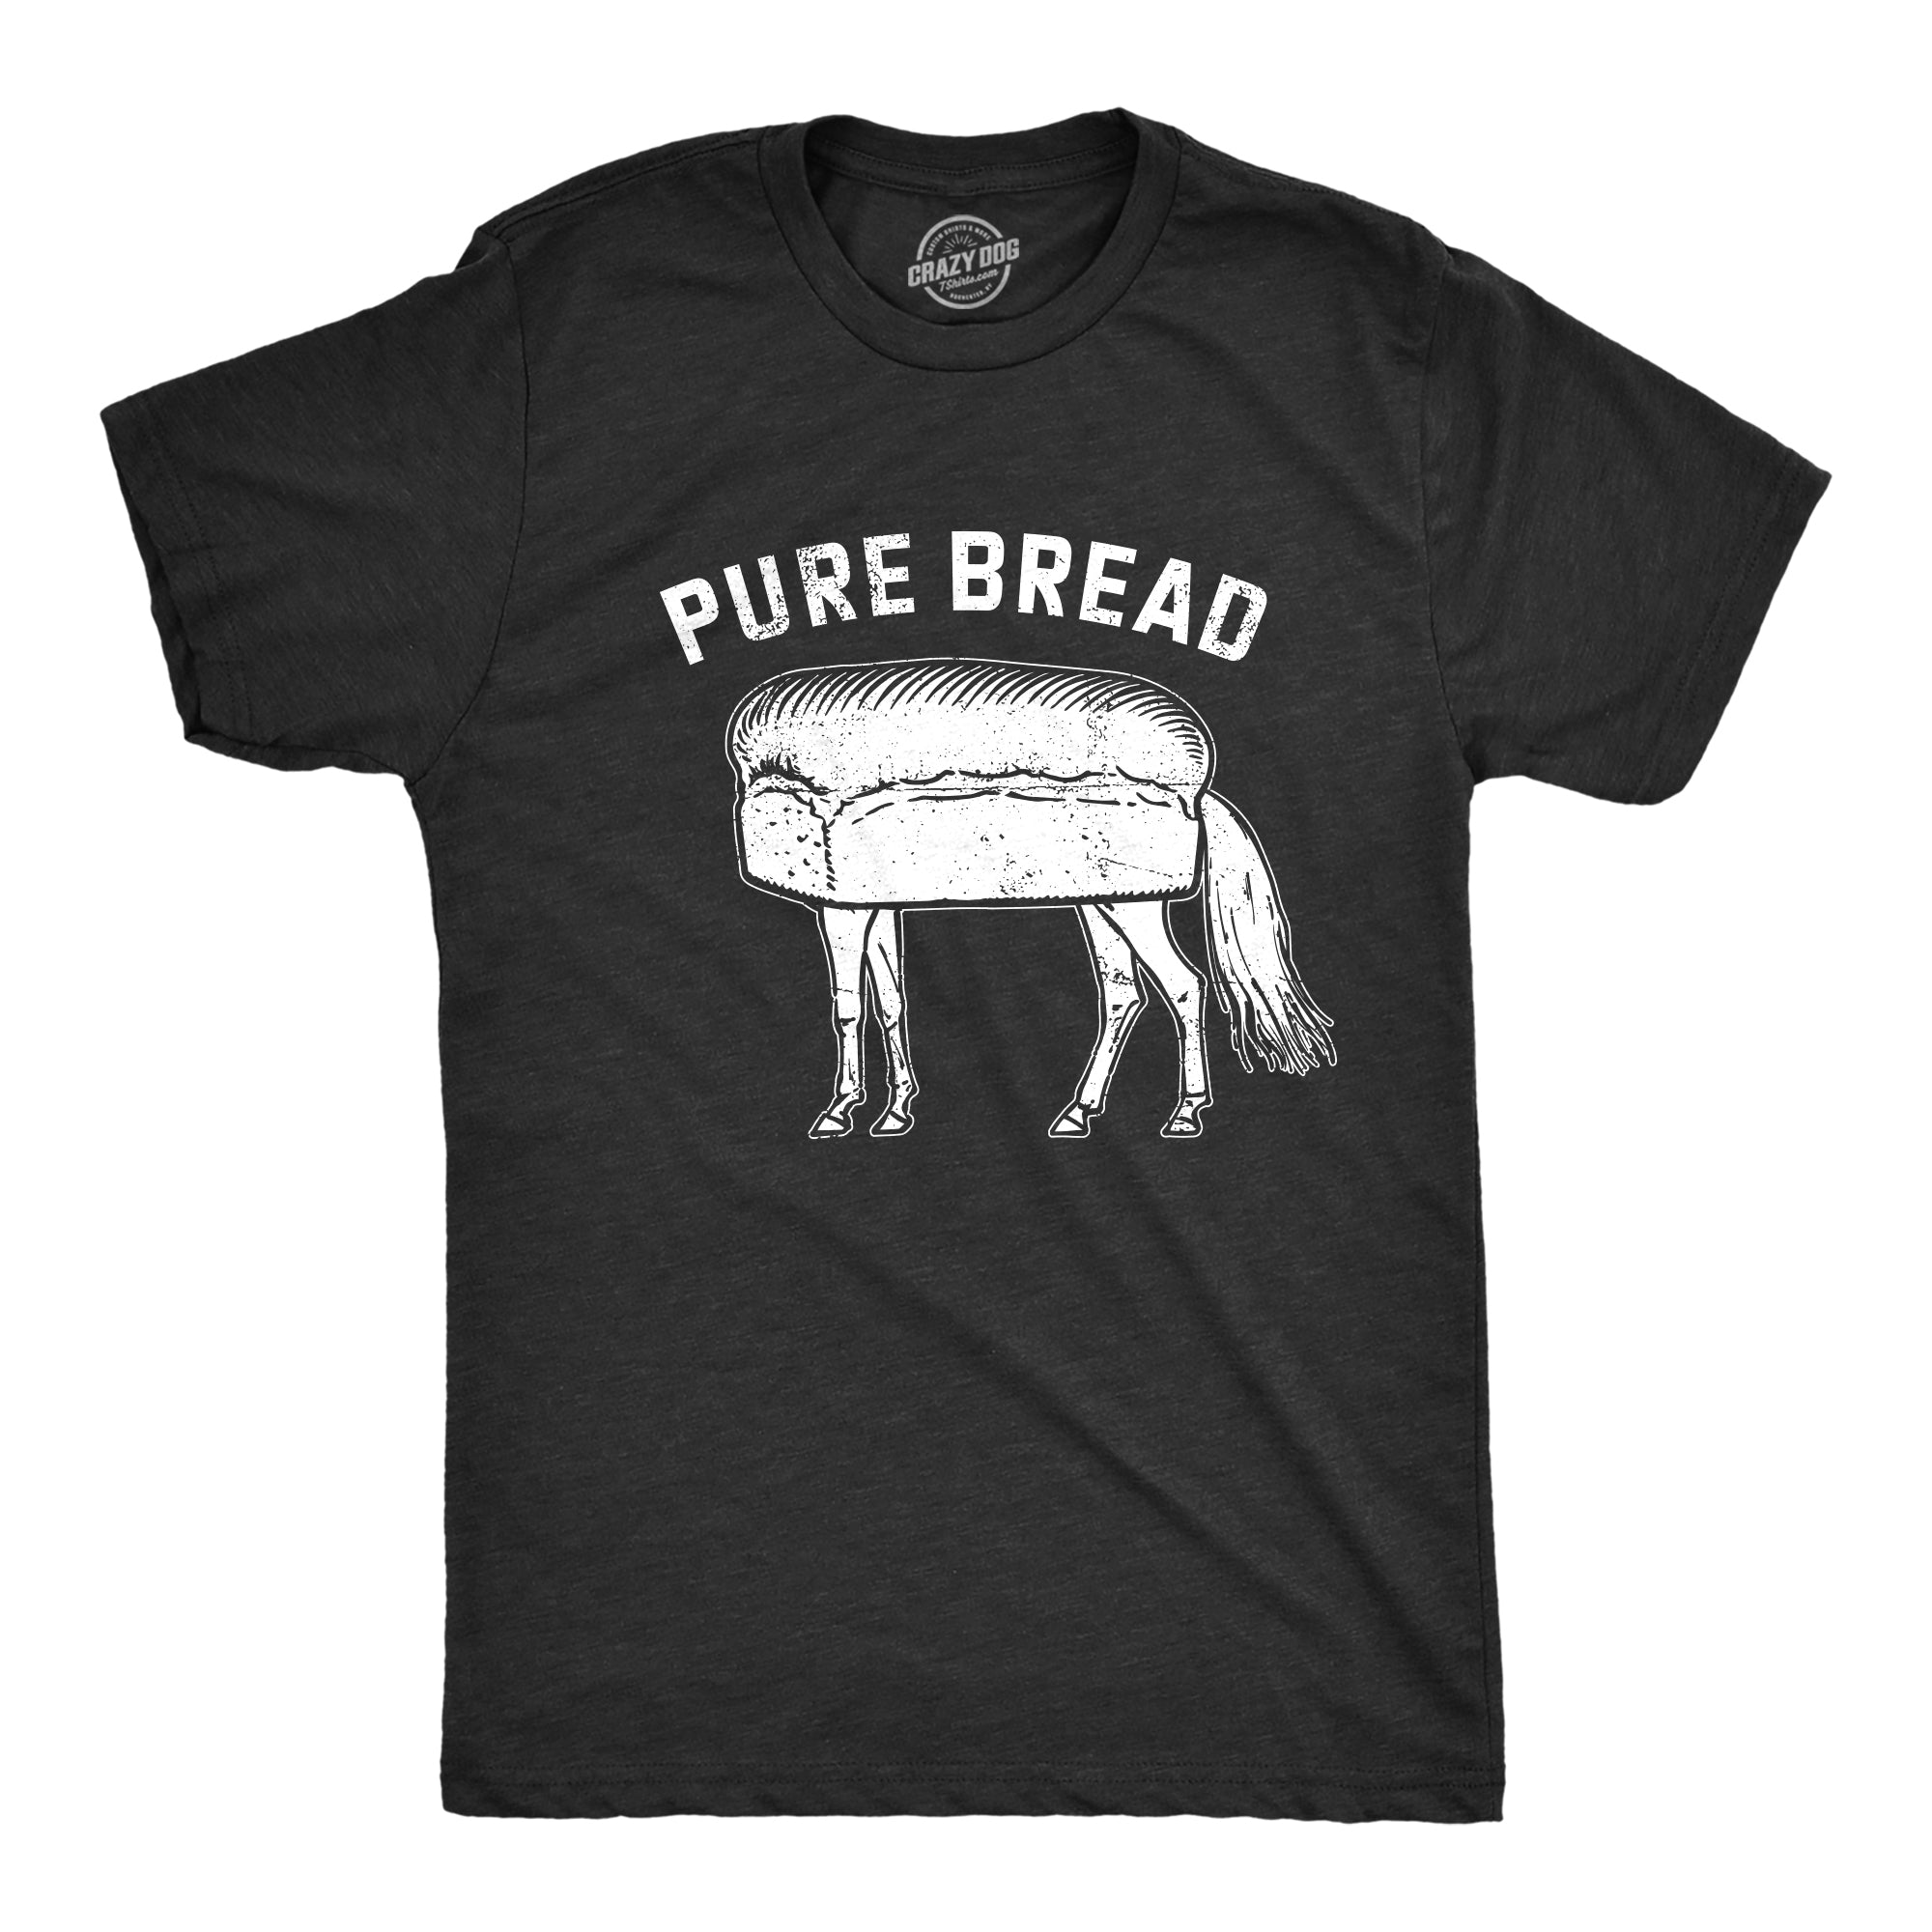 Funny Heather Black - Purebread Pure Bread Mens T Shirt Nerdy Food Animal Tee